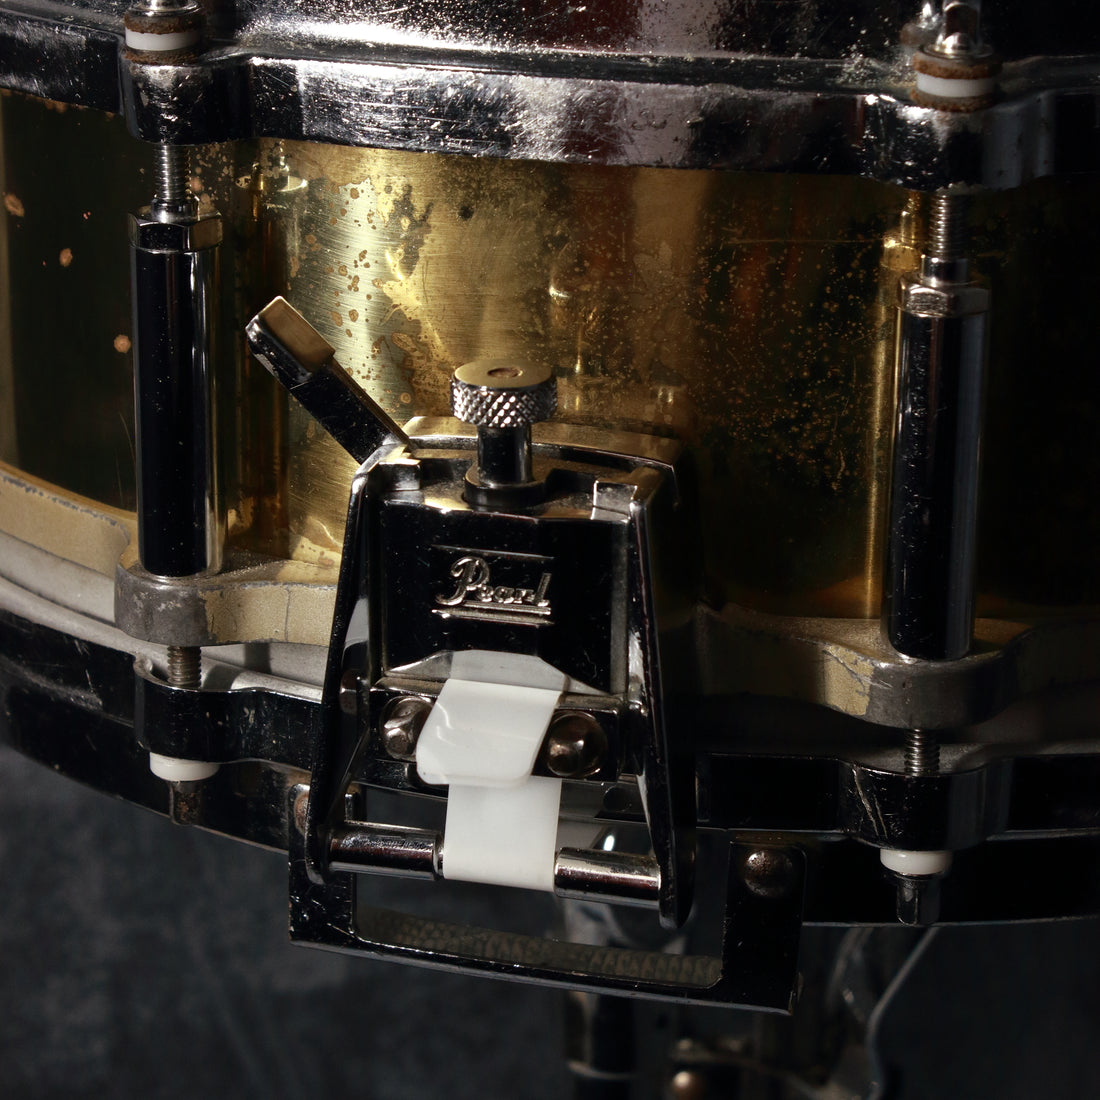 Pearl MIJ 14x5 Free Floating Brass Snare Drum (2nd Gen) (FB-1450/B-911 –  Topshelf Instruments